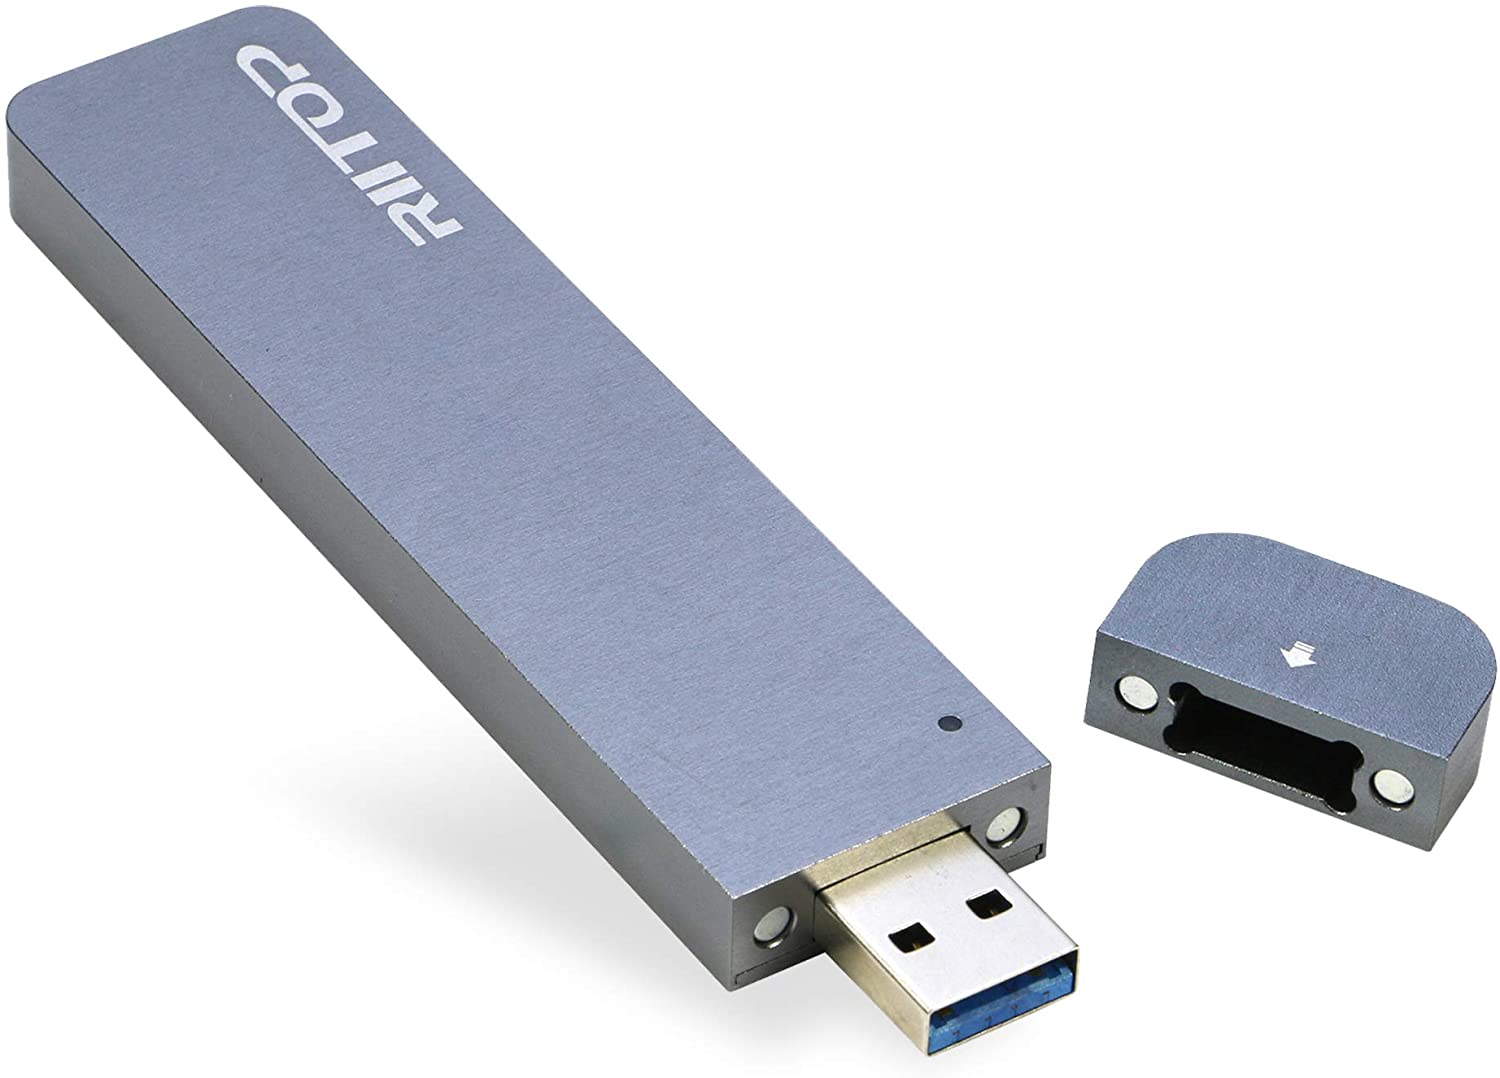 M2 SSD Case NVME Enclosure M.2 to USB 3.1 SSD Adapter for NVME PCIE NGFF  SATA M/B Key 2230/2242/2260/2280 RTL9210B Dual Protocol